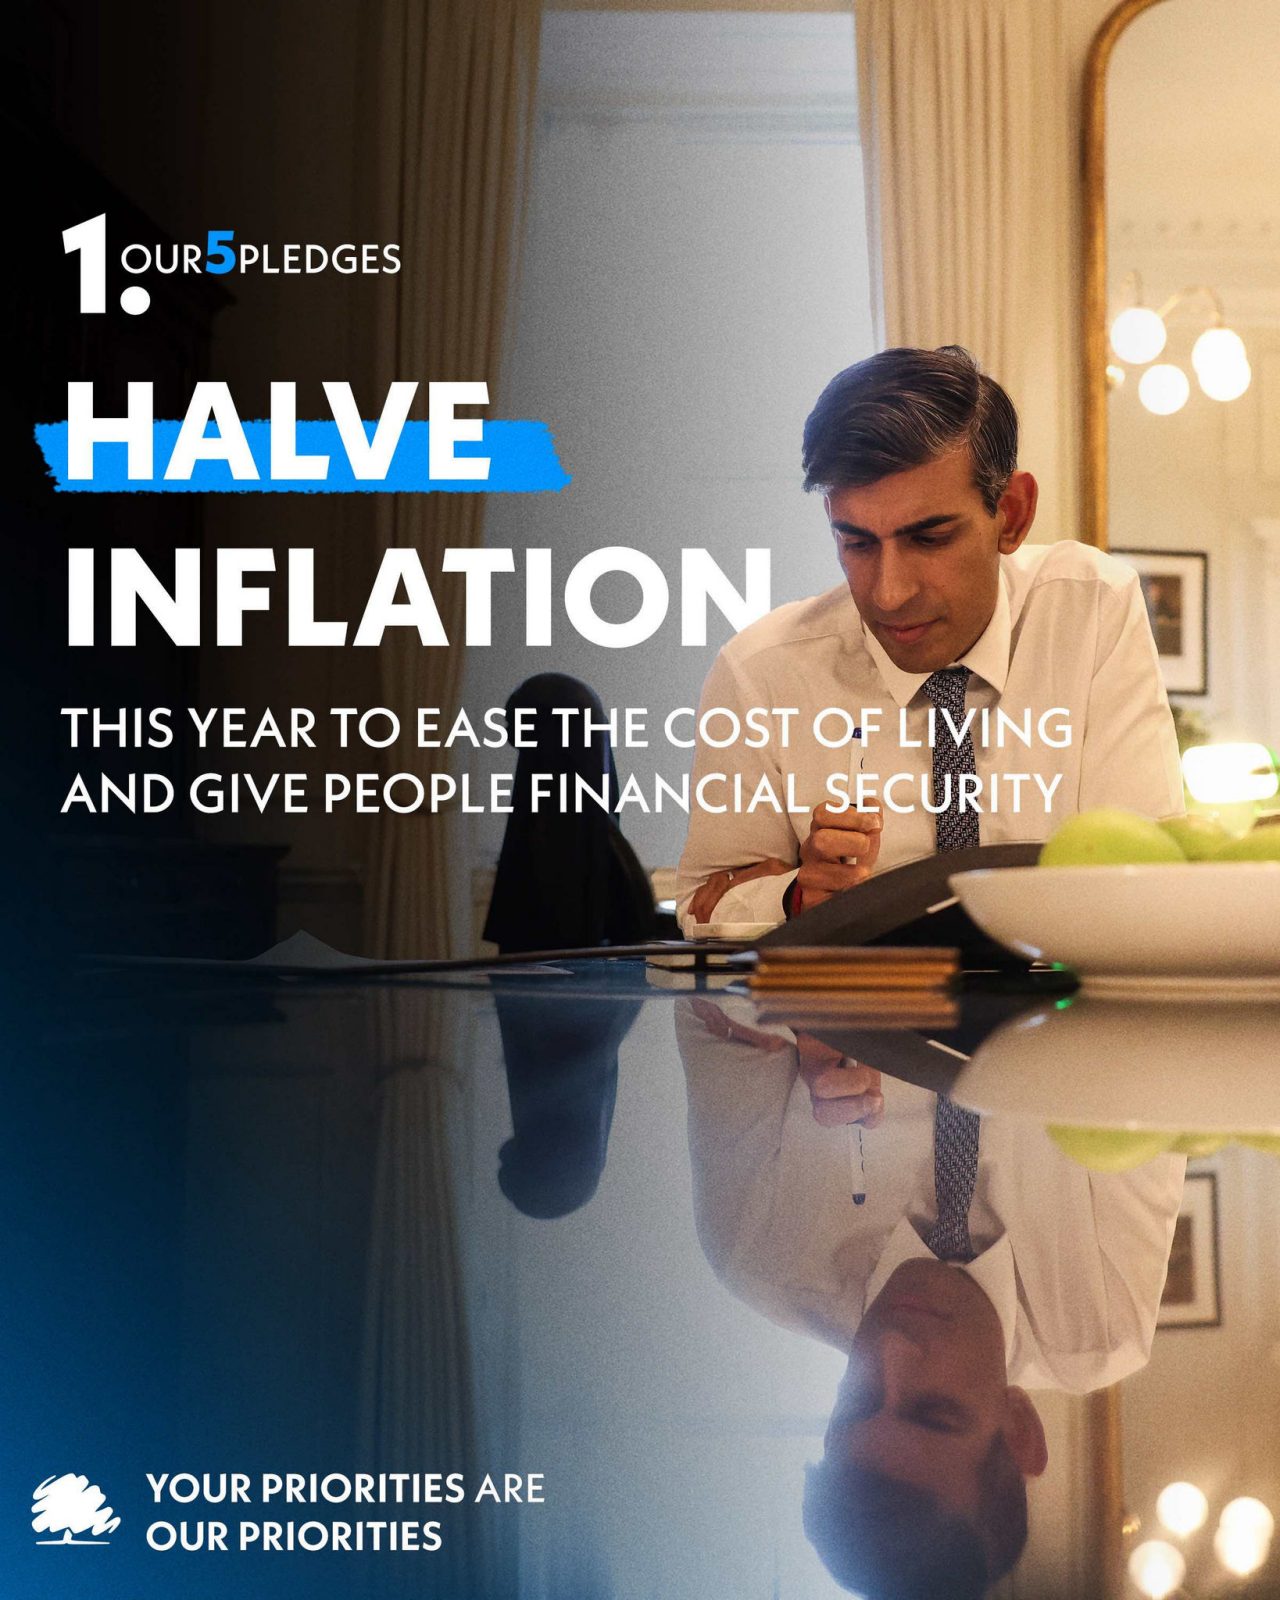 We will halve inflation